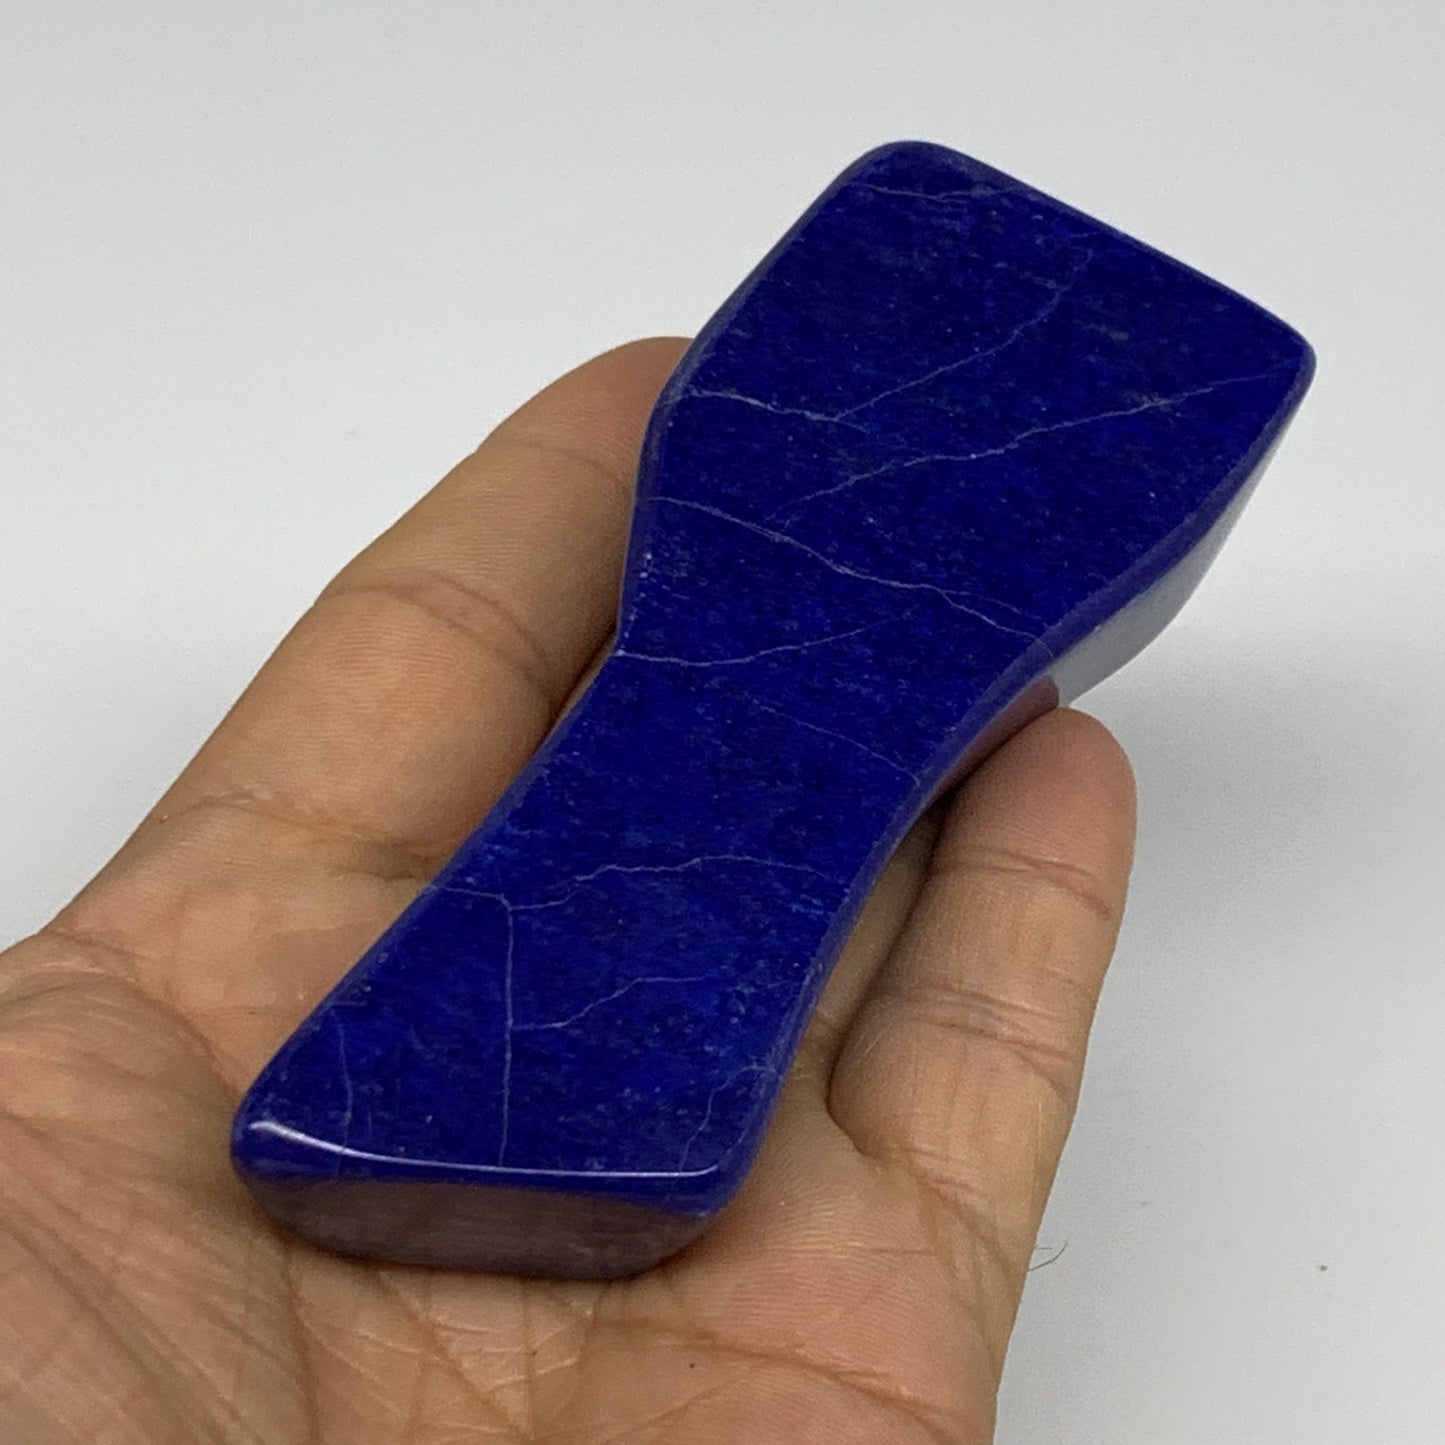 0.39 lbs, 4.2"x1.6"x0.9", Natural Freeform Lapis Lazuli from Afghanistan, B33398